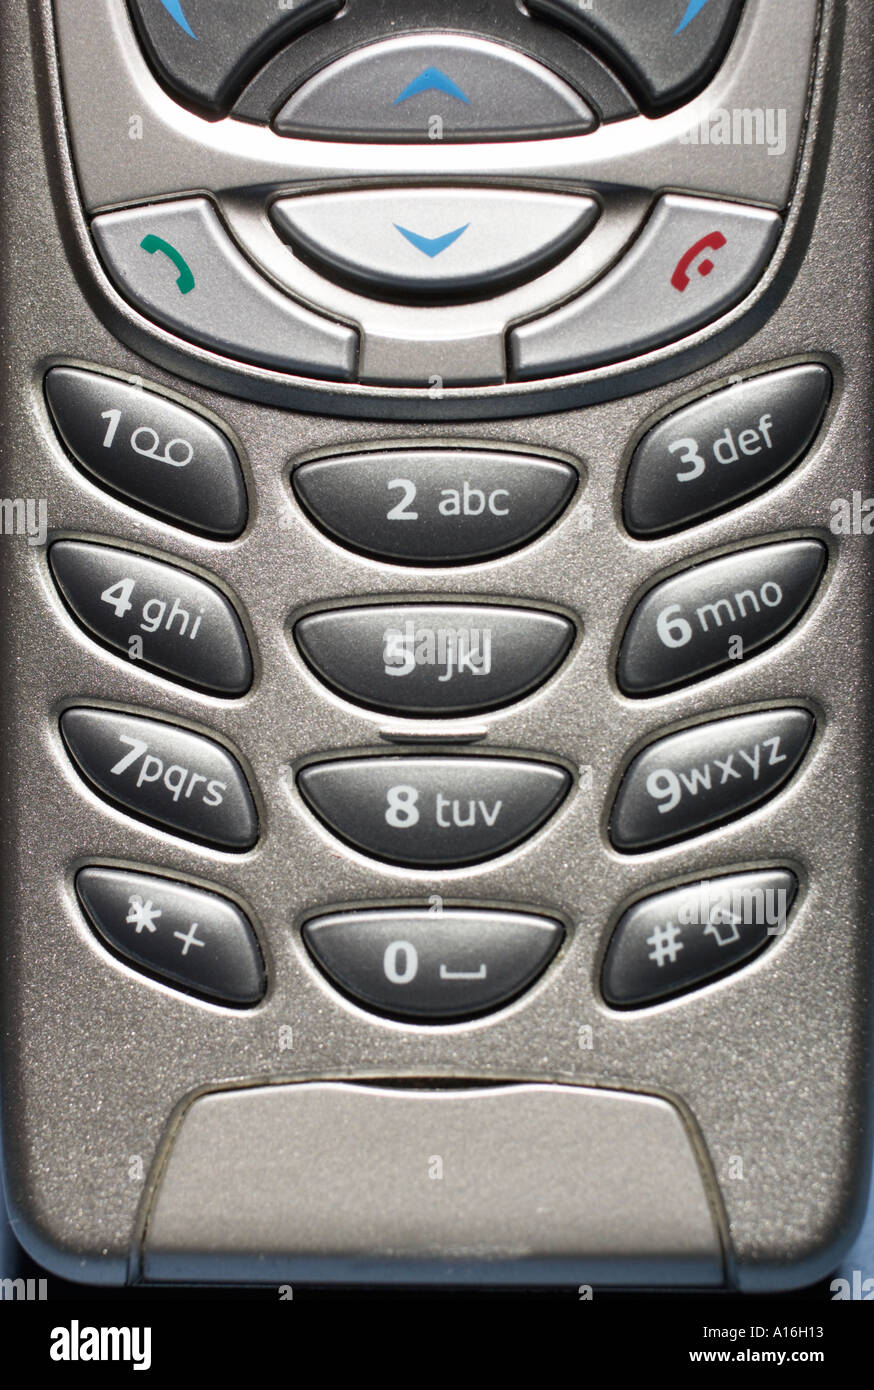 old mobile phone keypad